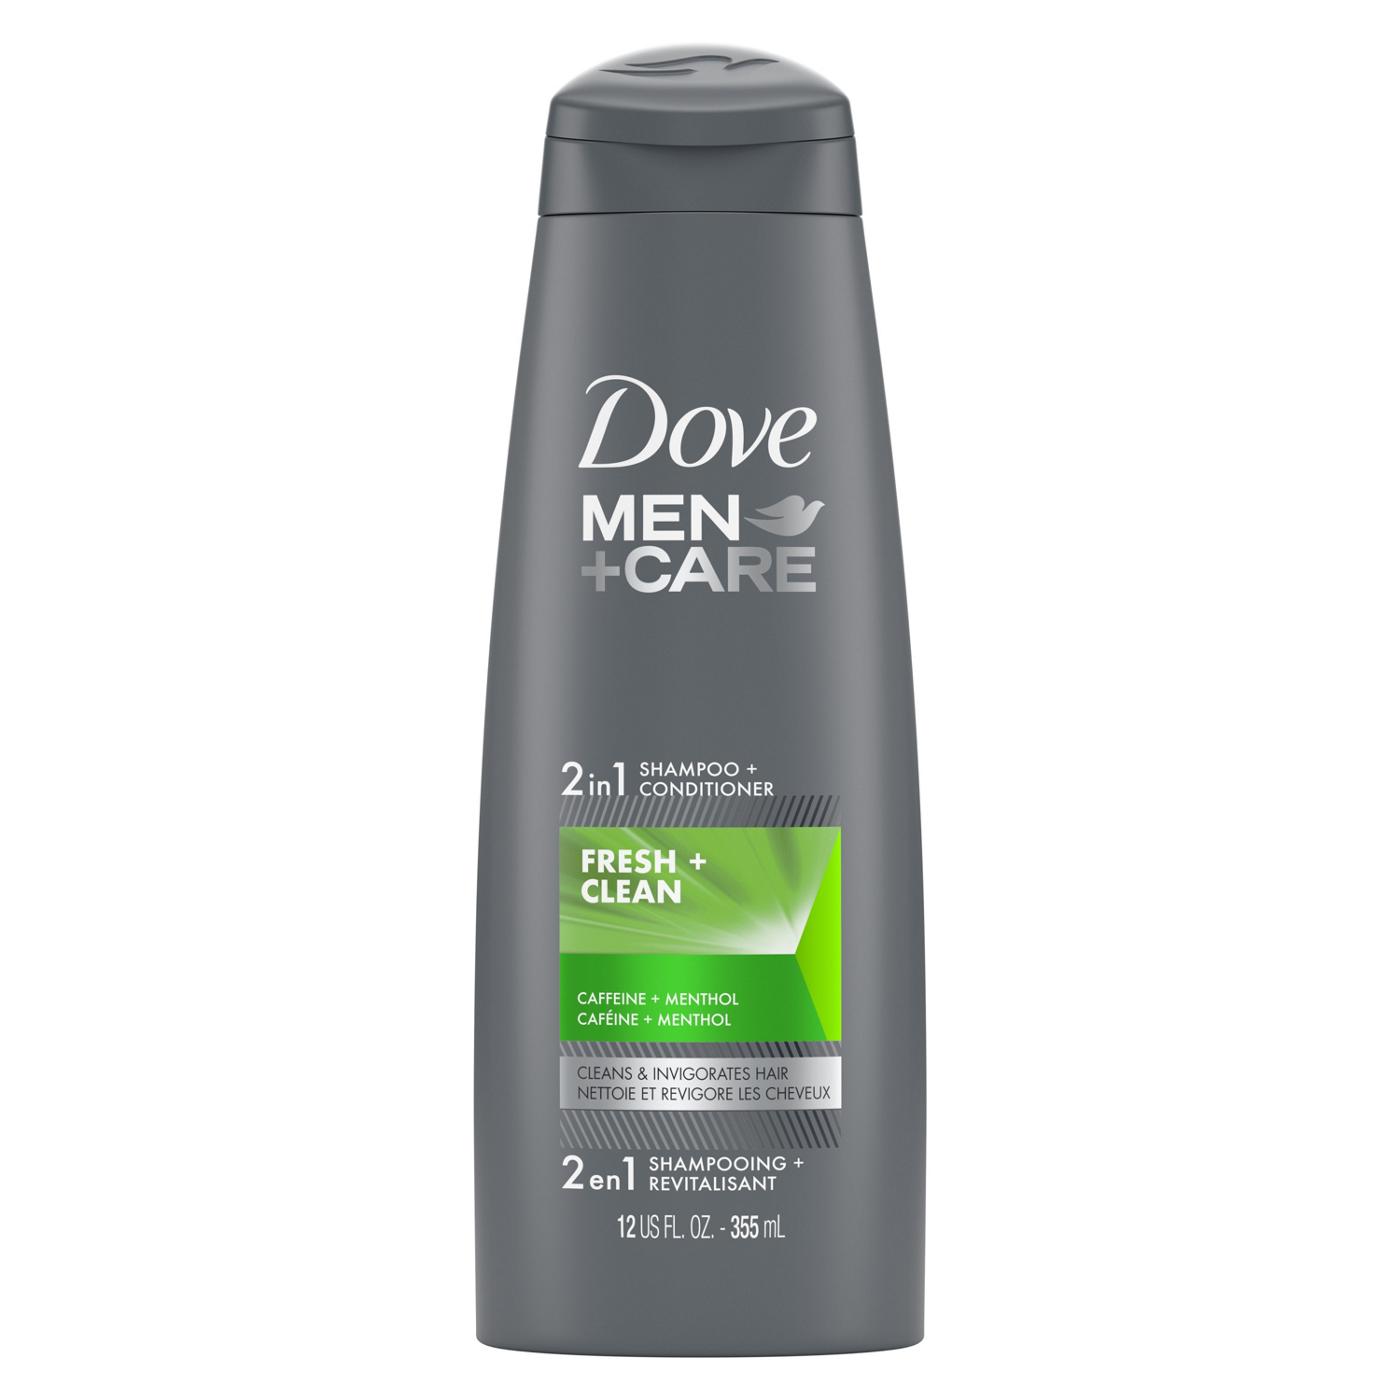 Dove Men+Care 2 in 1 Shampoo + Conditioner - Fresh + Clean; image 1 of 6